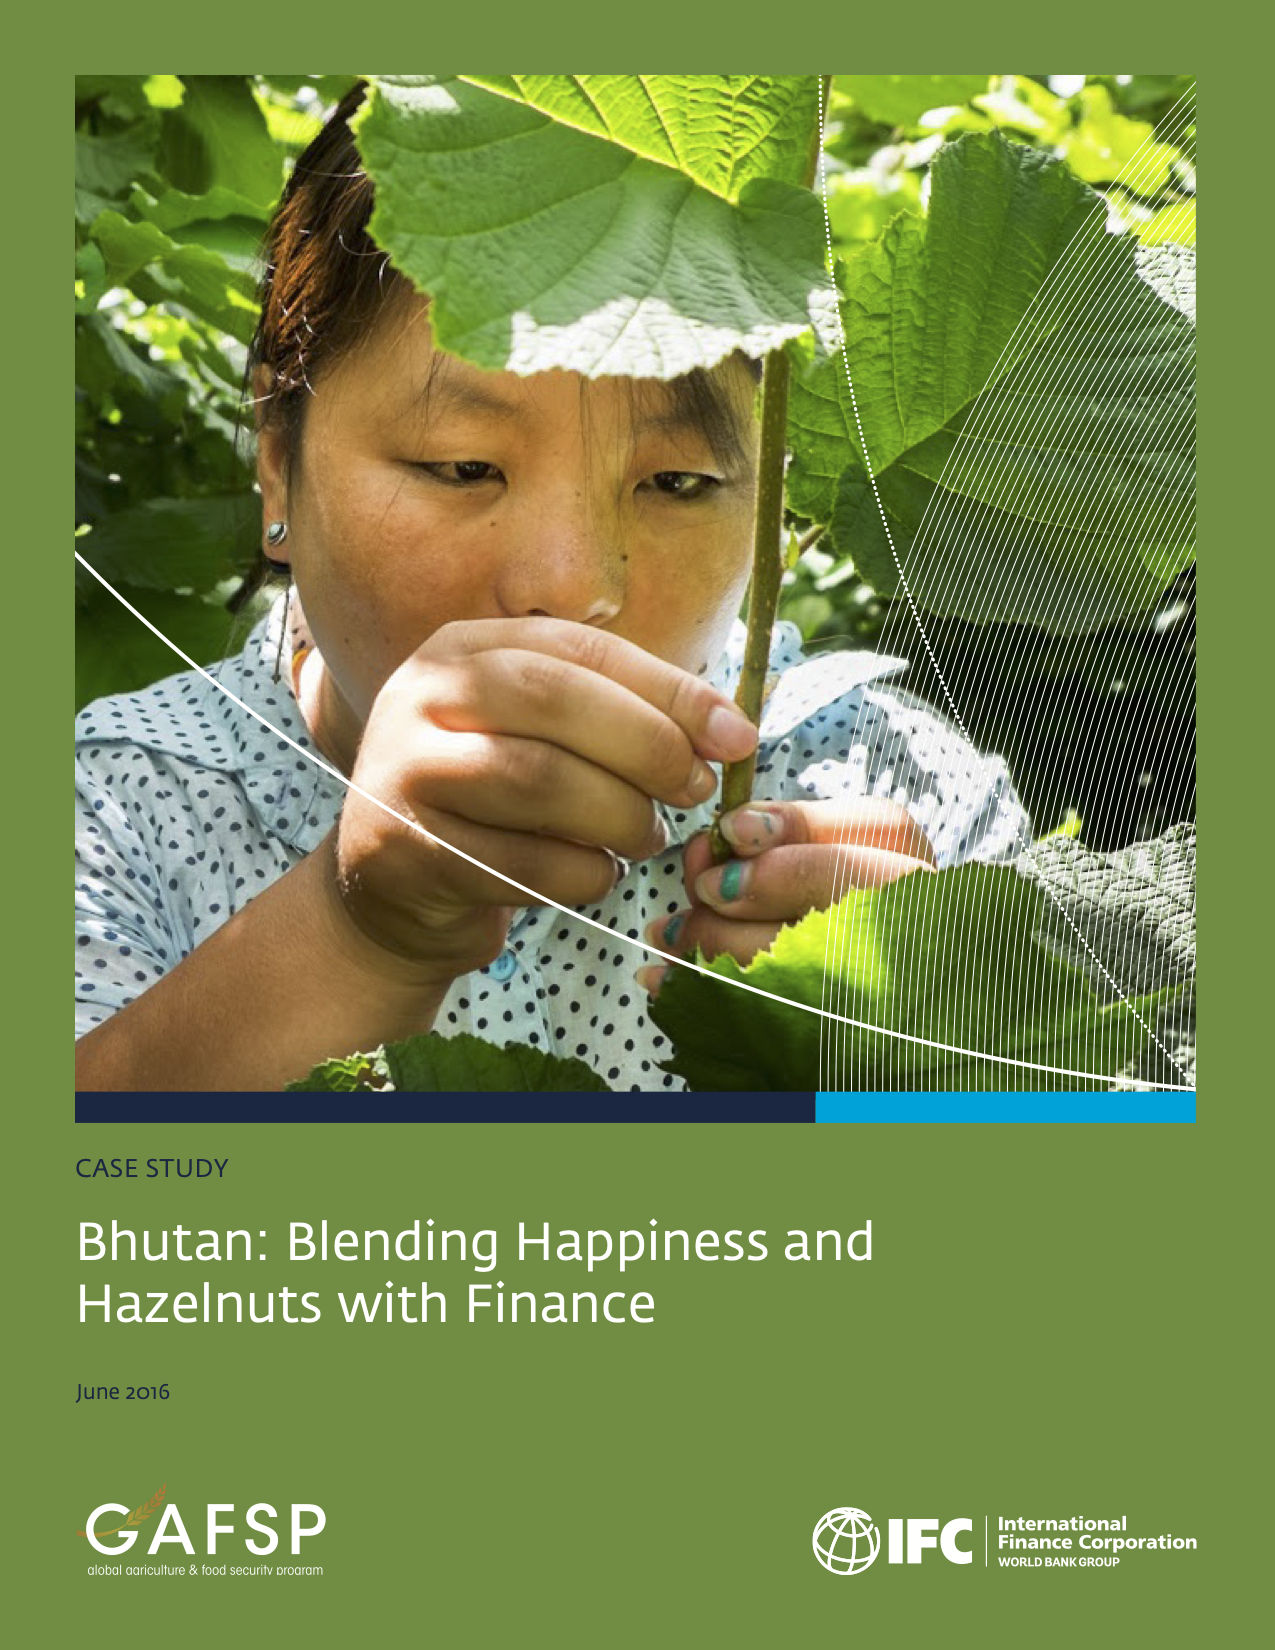 Blending Happiness Hazelnuts and Finance in Bhutan